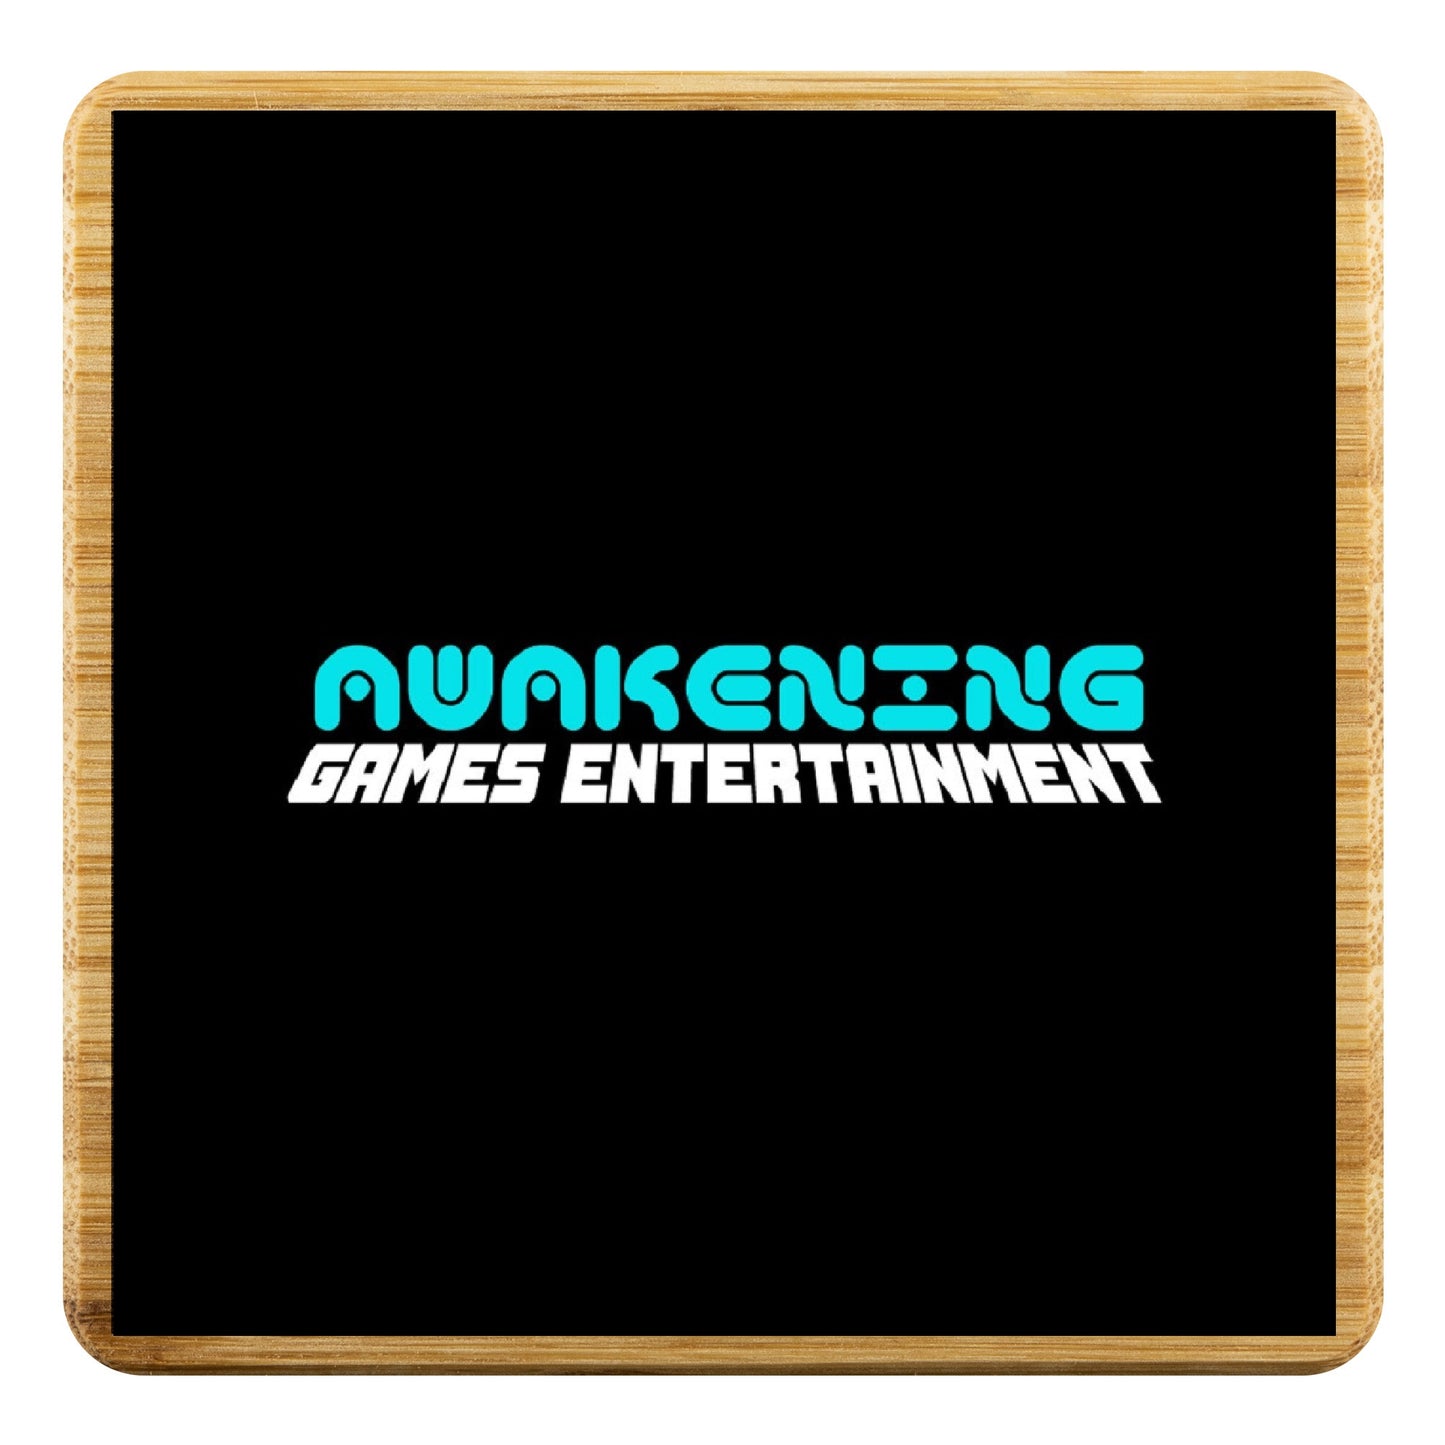 Awakening Games Entertainment Natural Bamboo Table Coasters